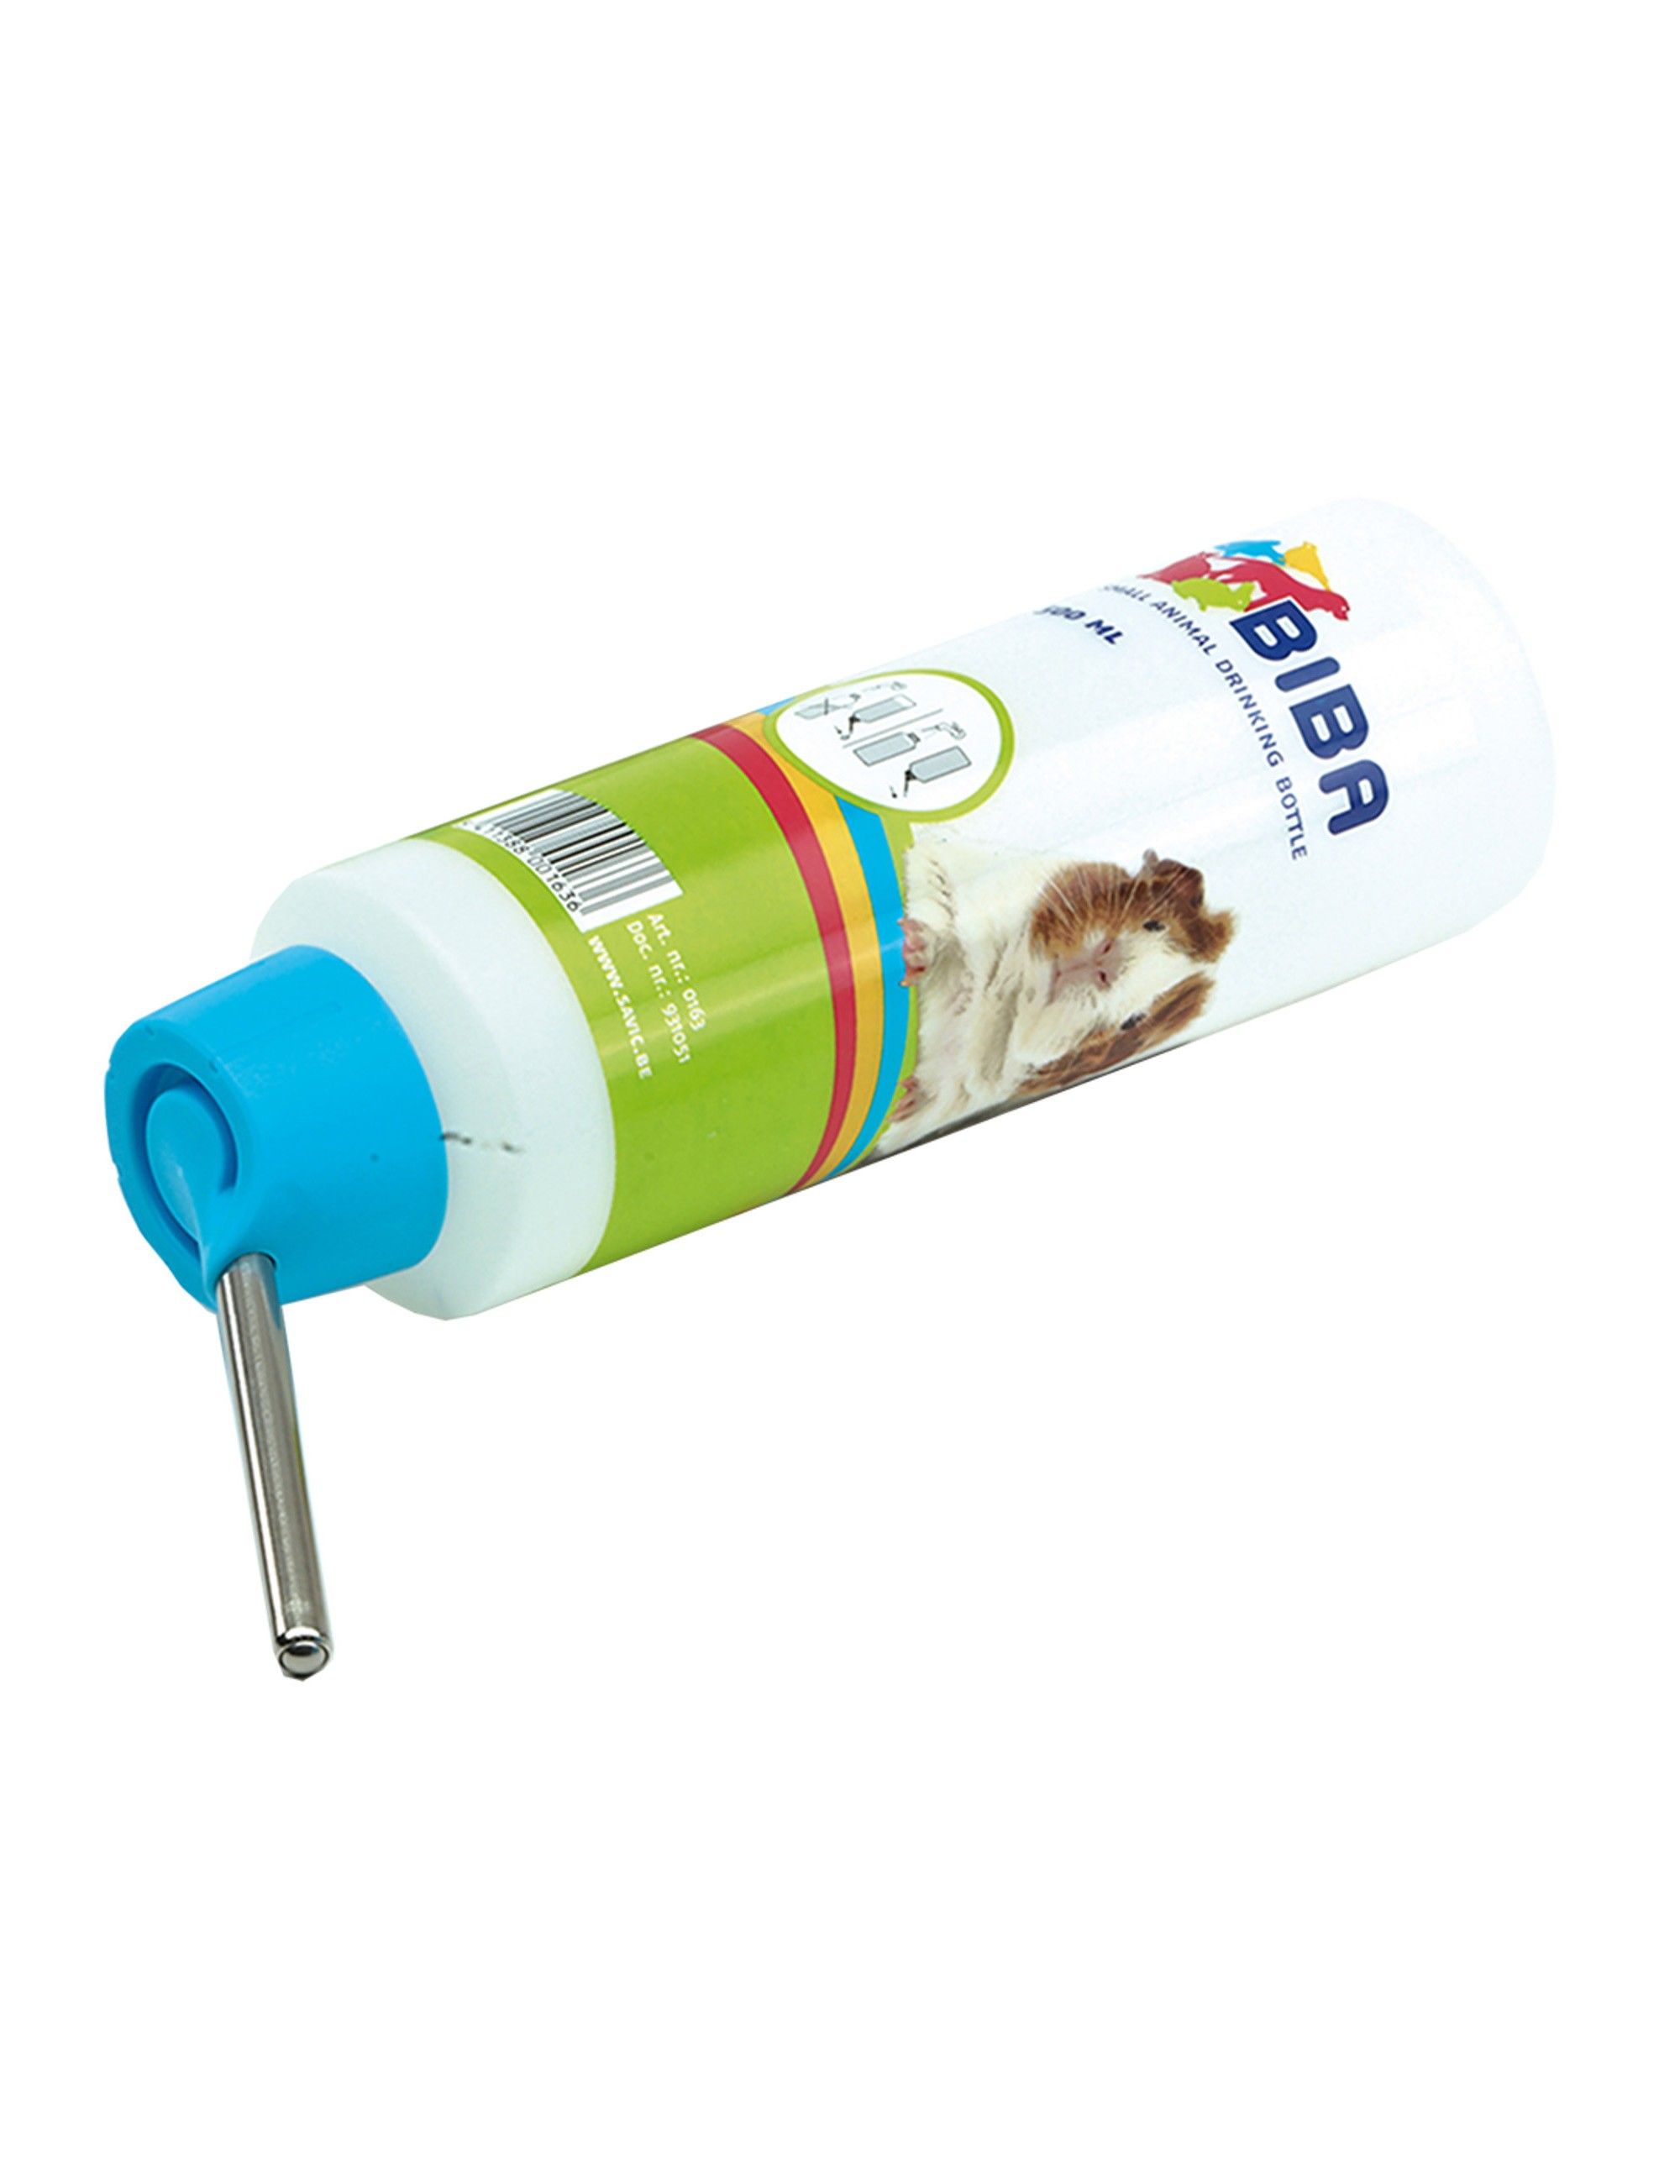 SAVIC - “Biba” feeding bottle for rodents